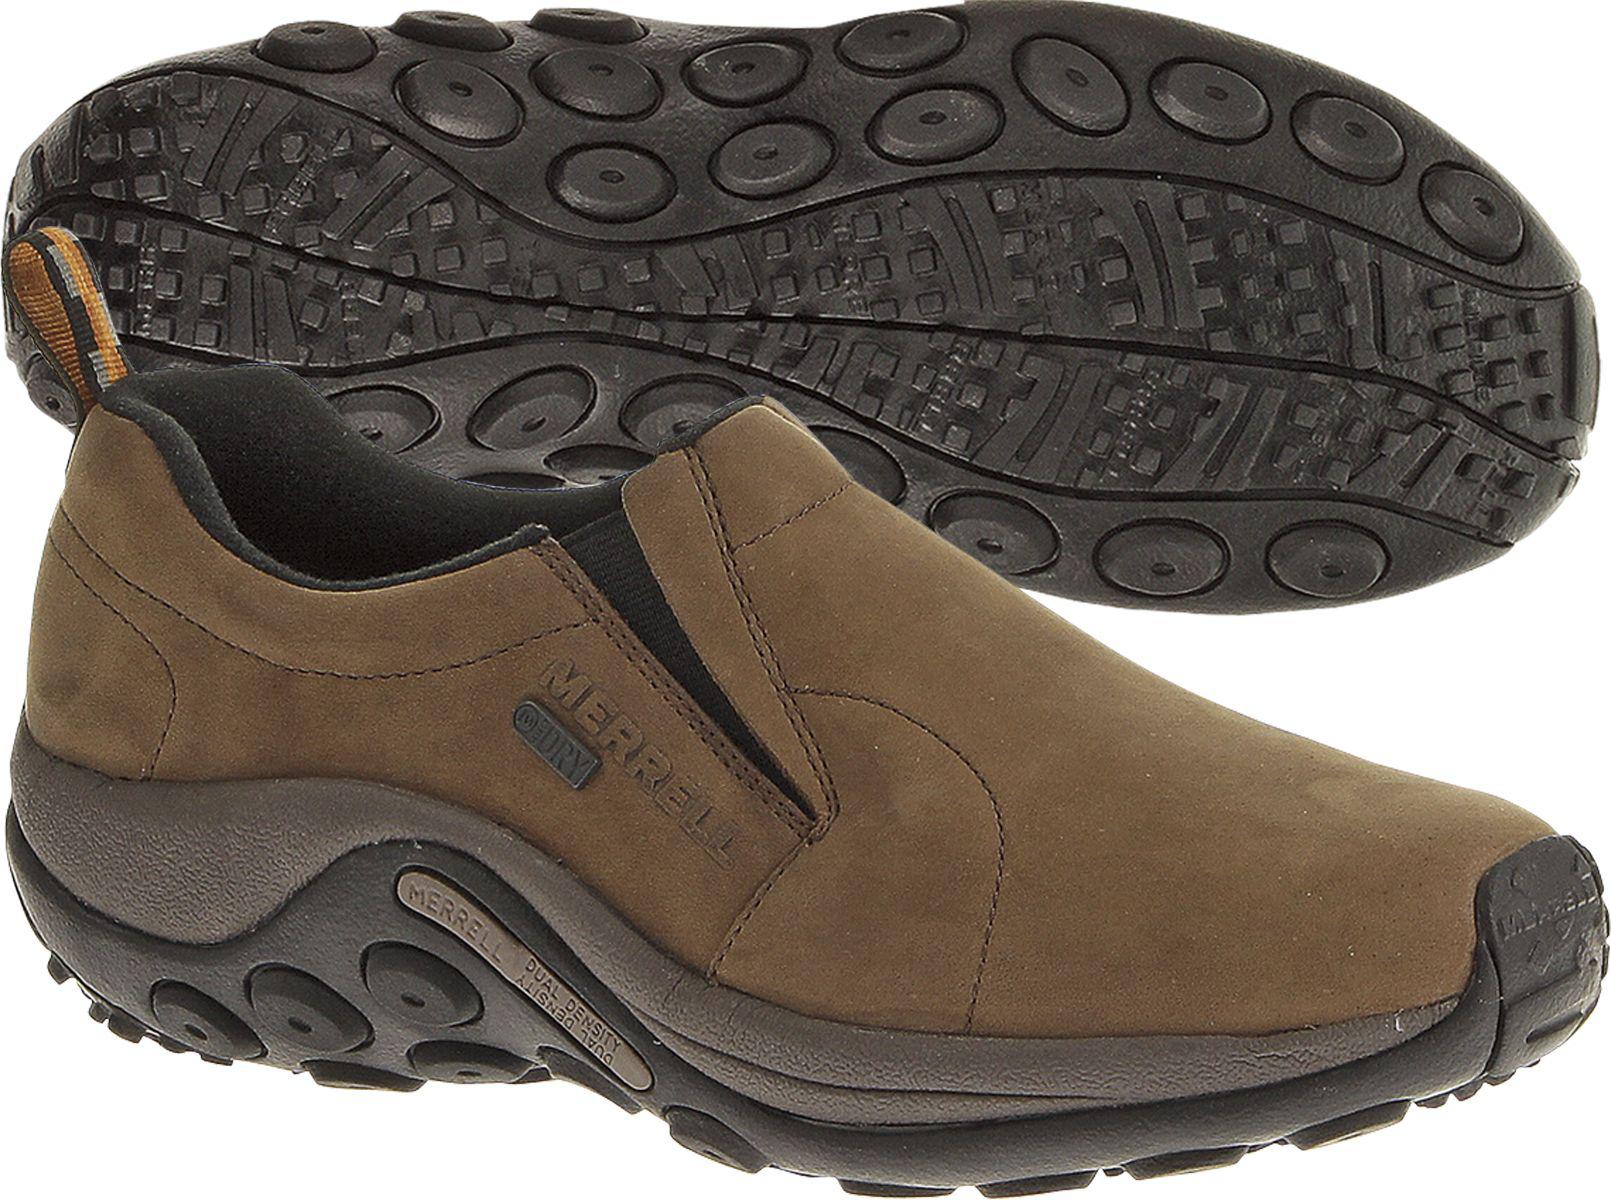 Merrell Jungle Moc Nubuck Waterproof Casual Shoes in Brown for Men - Lyst